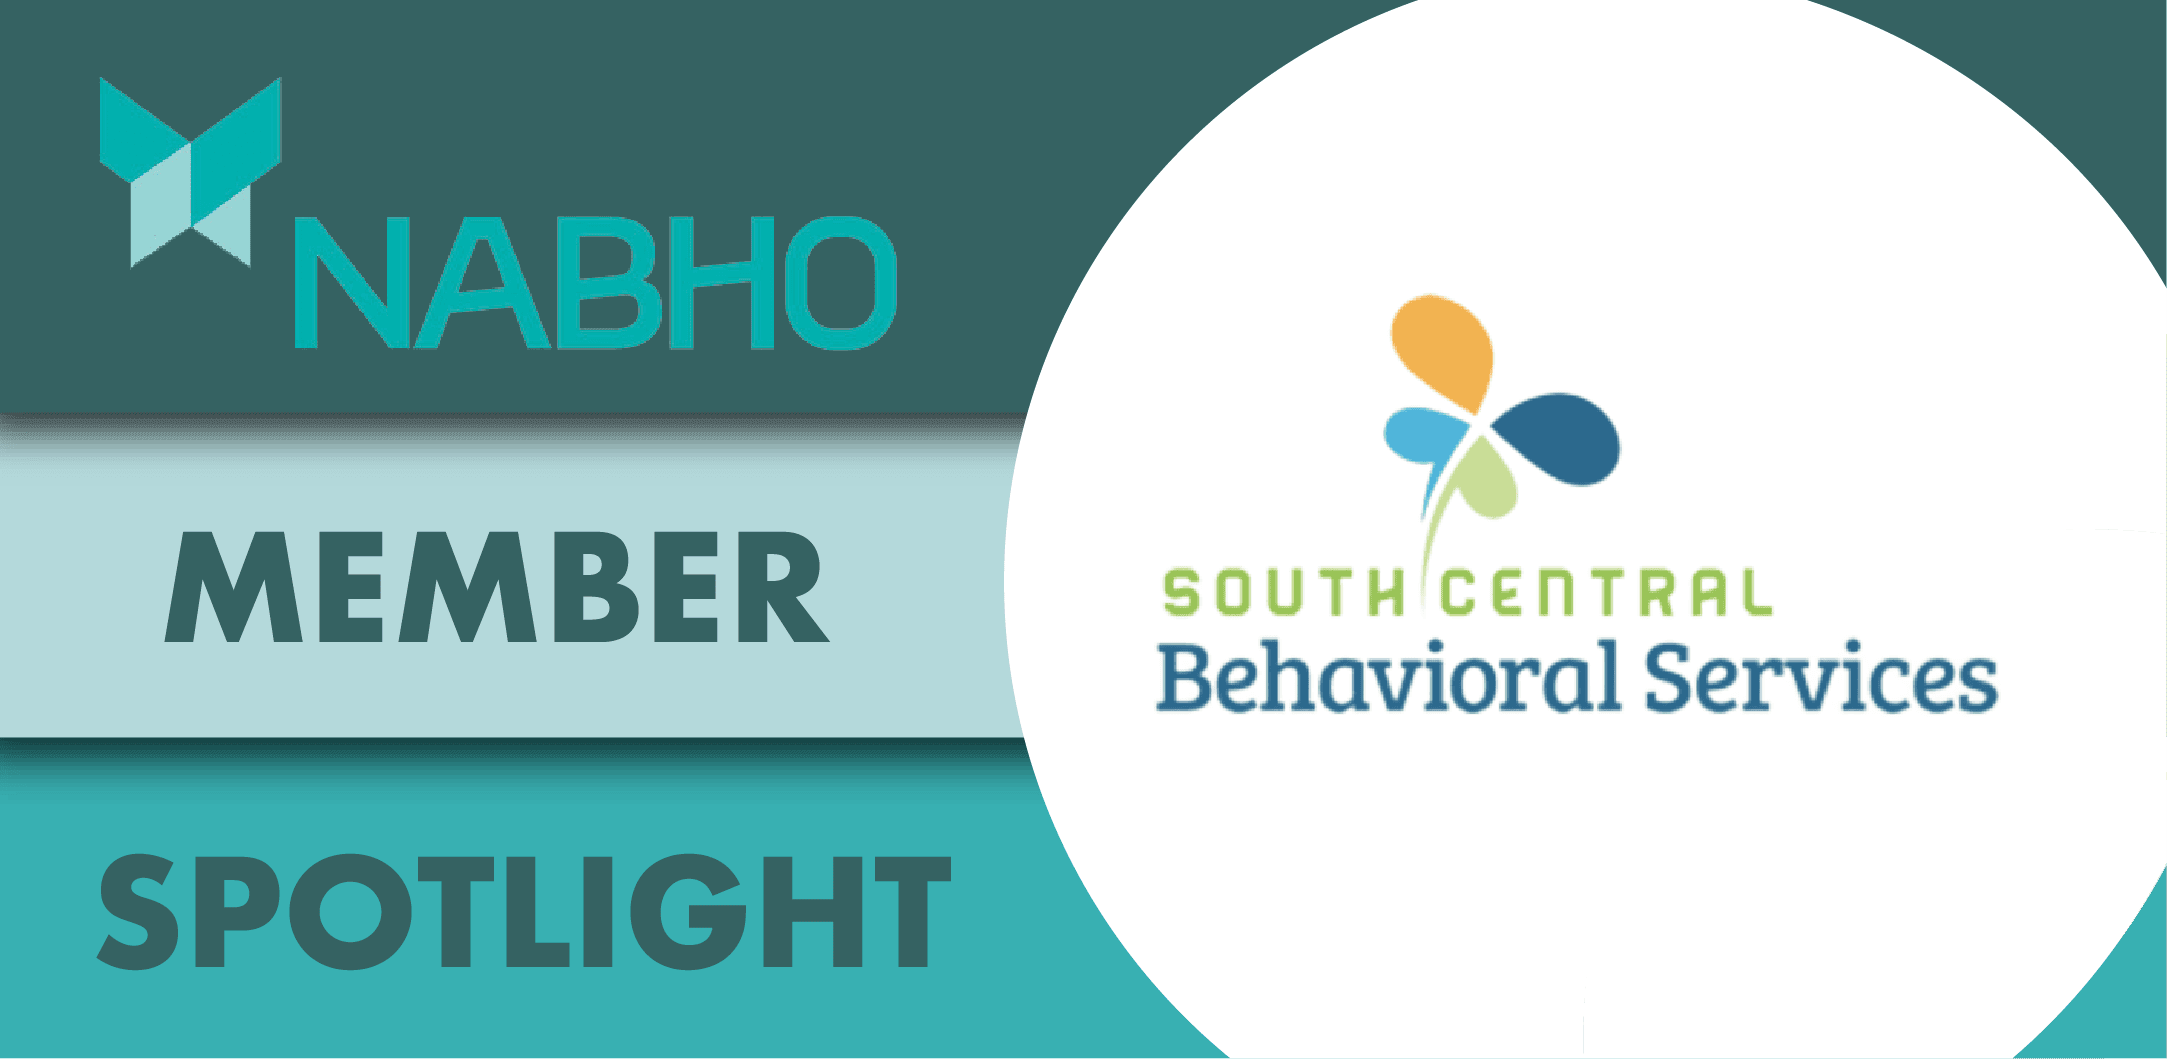 NABHO Member Spotlight - South Central Behavioral Services logo.